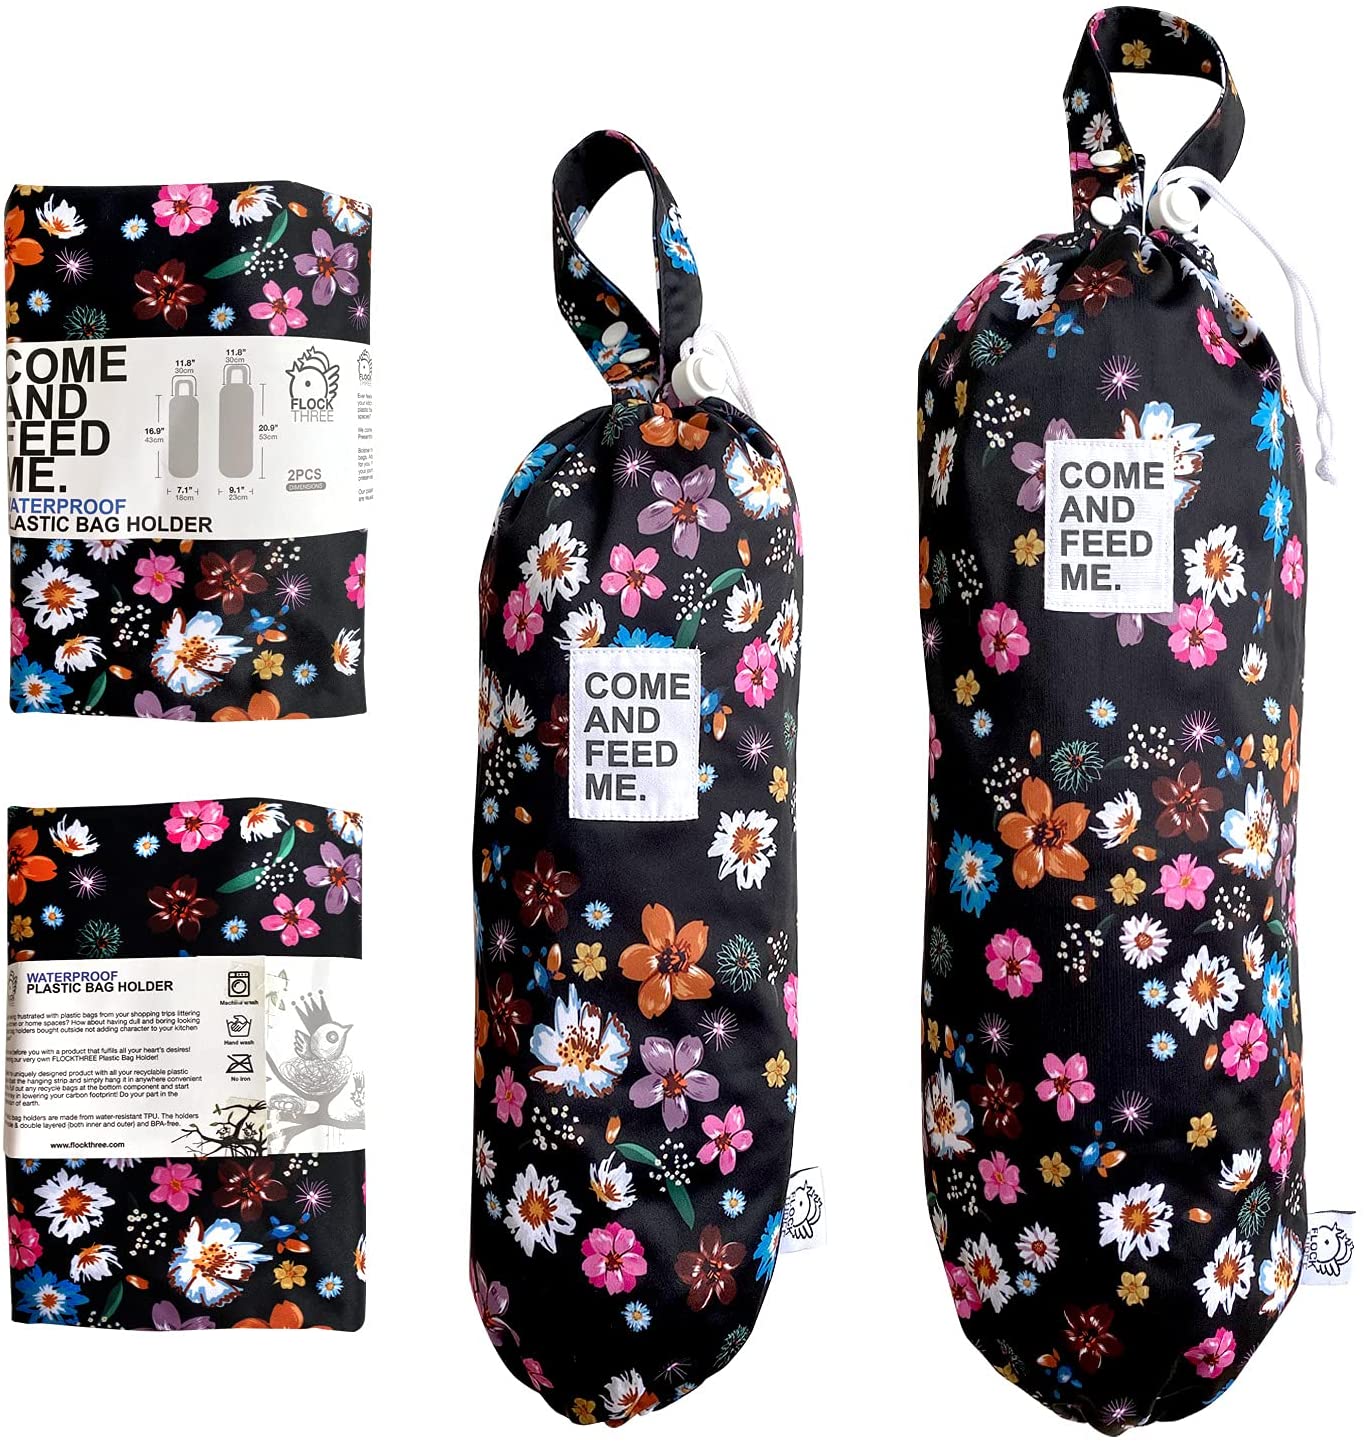 Flock Three 2pack Waterproof Plastic Bag Holder For Grocery Shopping Carrier Storage Kitchen Travel Camp Carrier Dispenser